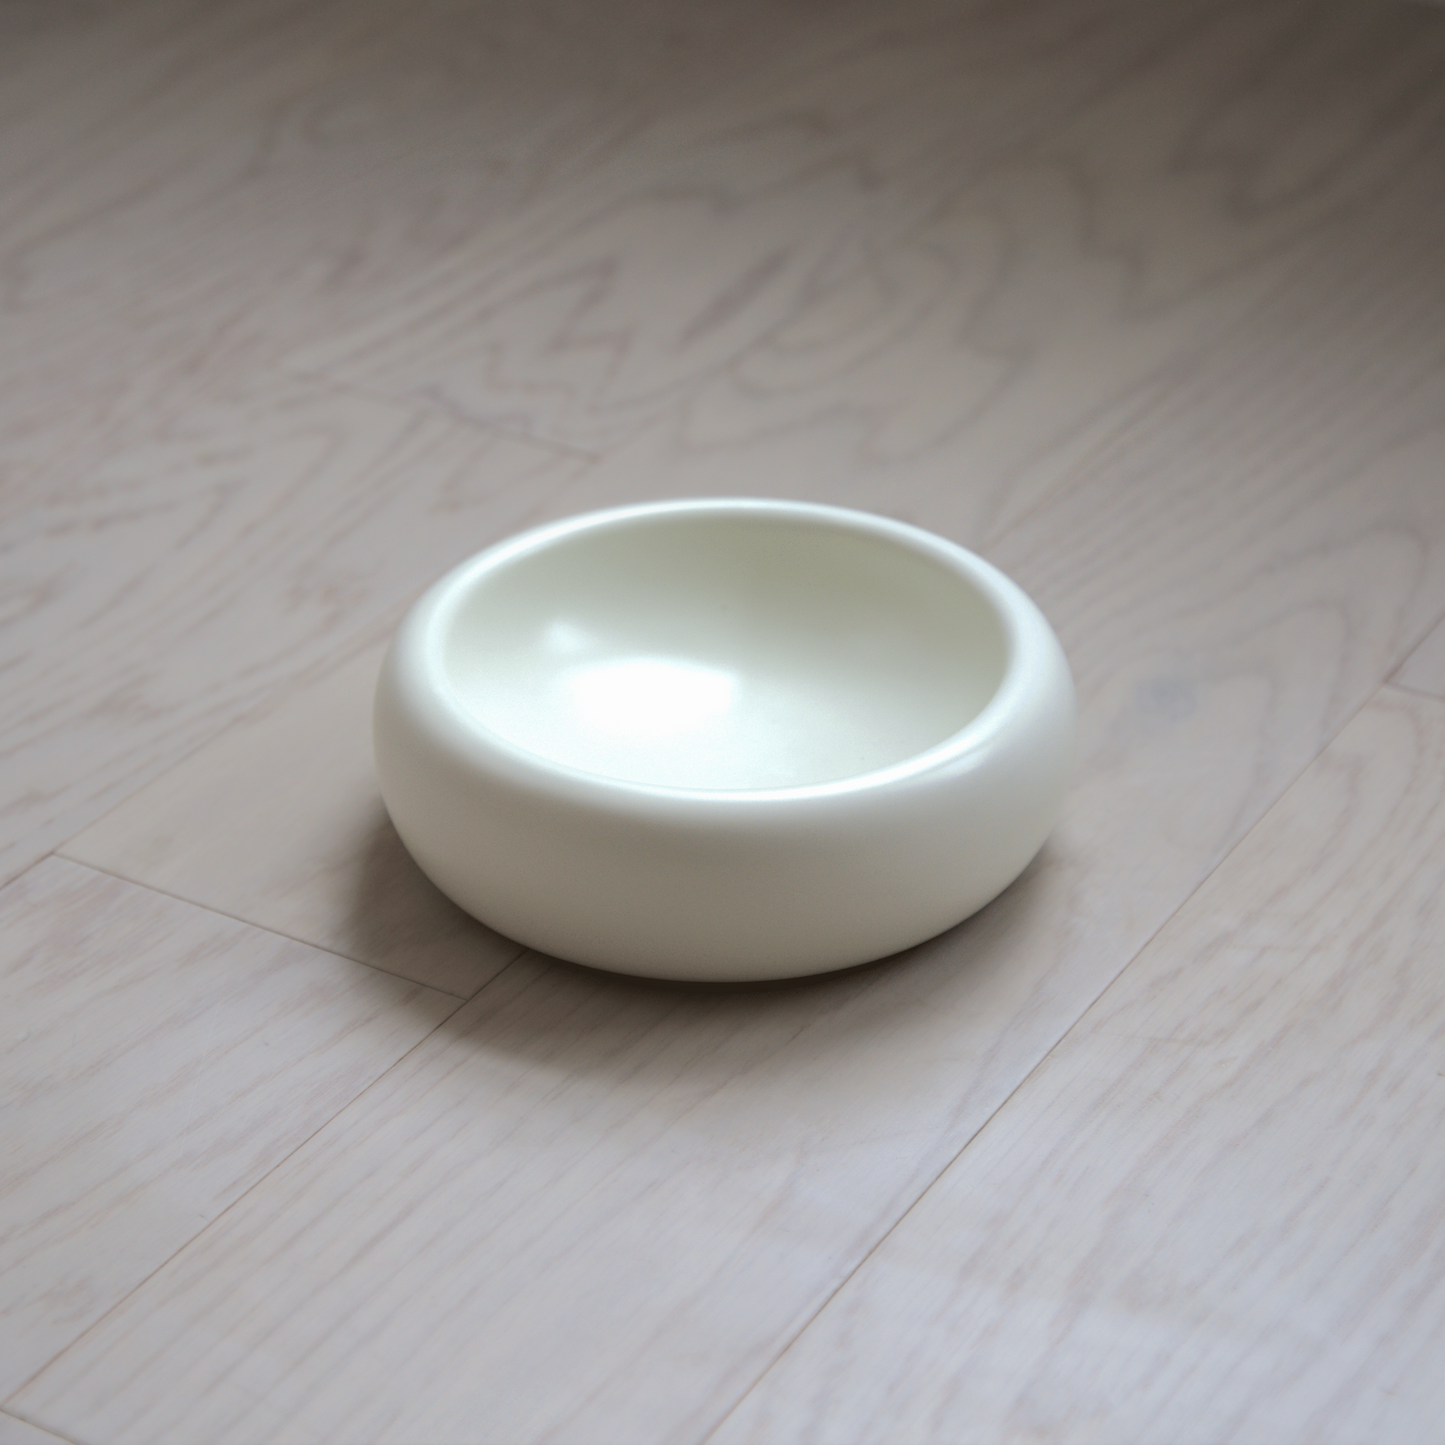 catenary white ceramic cat bowl on hardwood floor